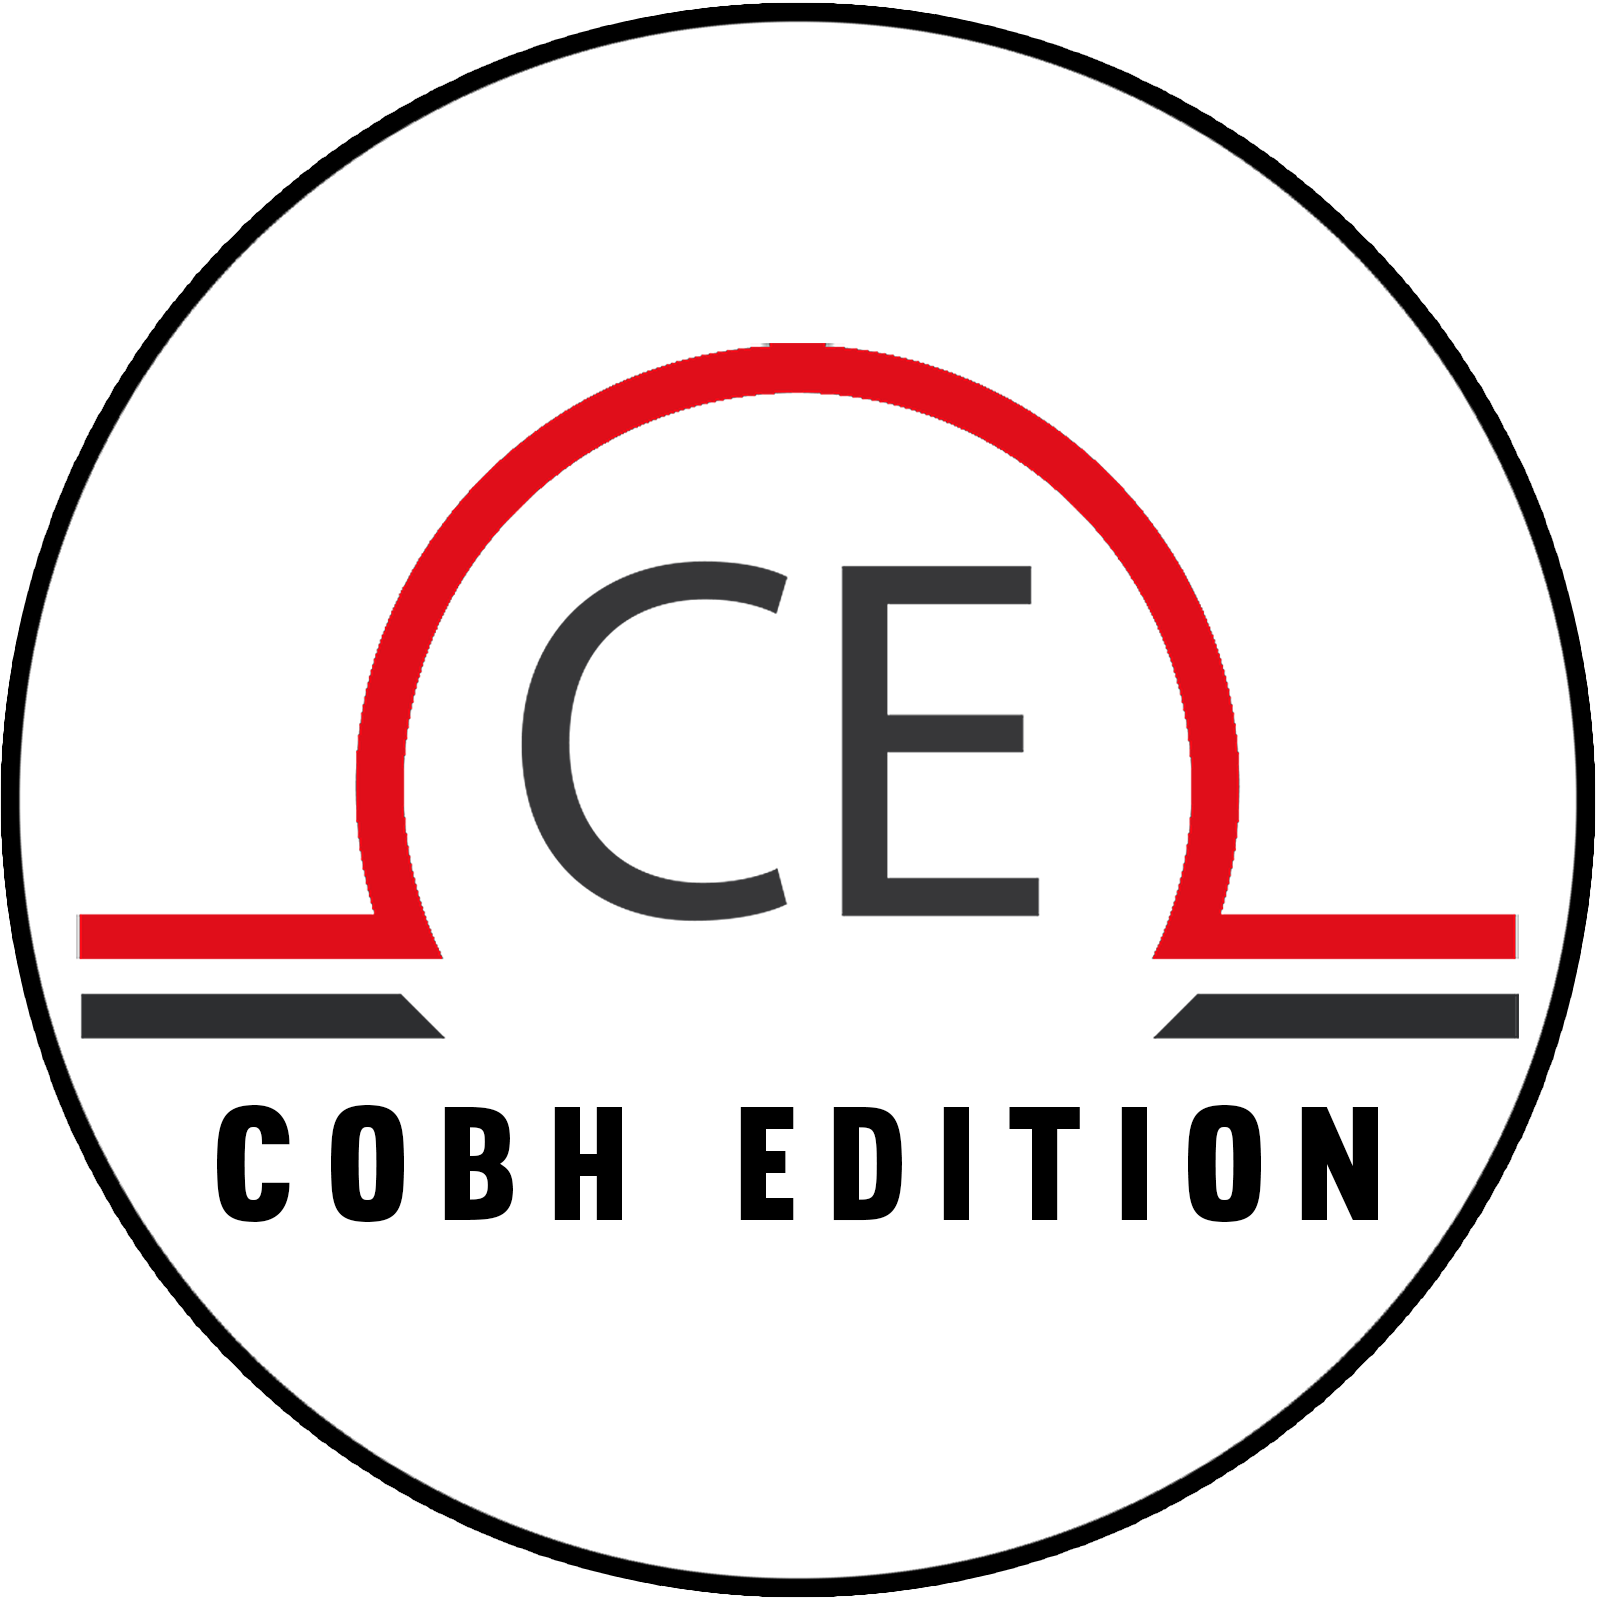 Cobh Edition